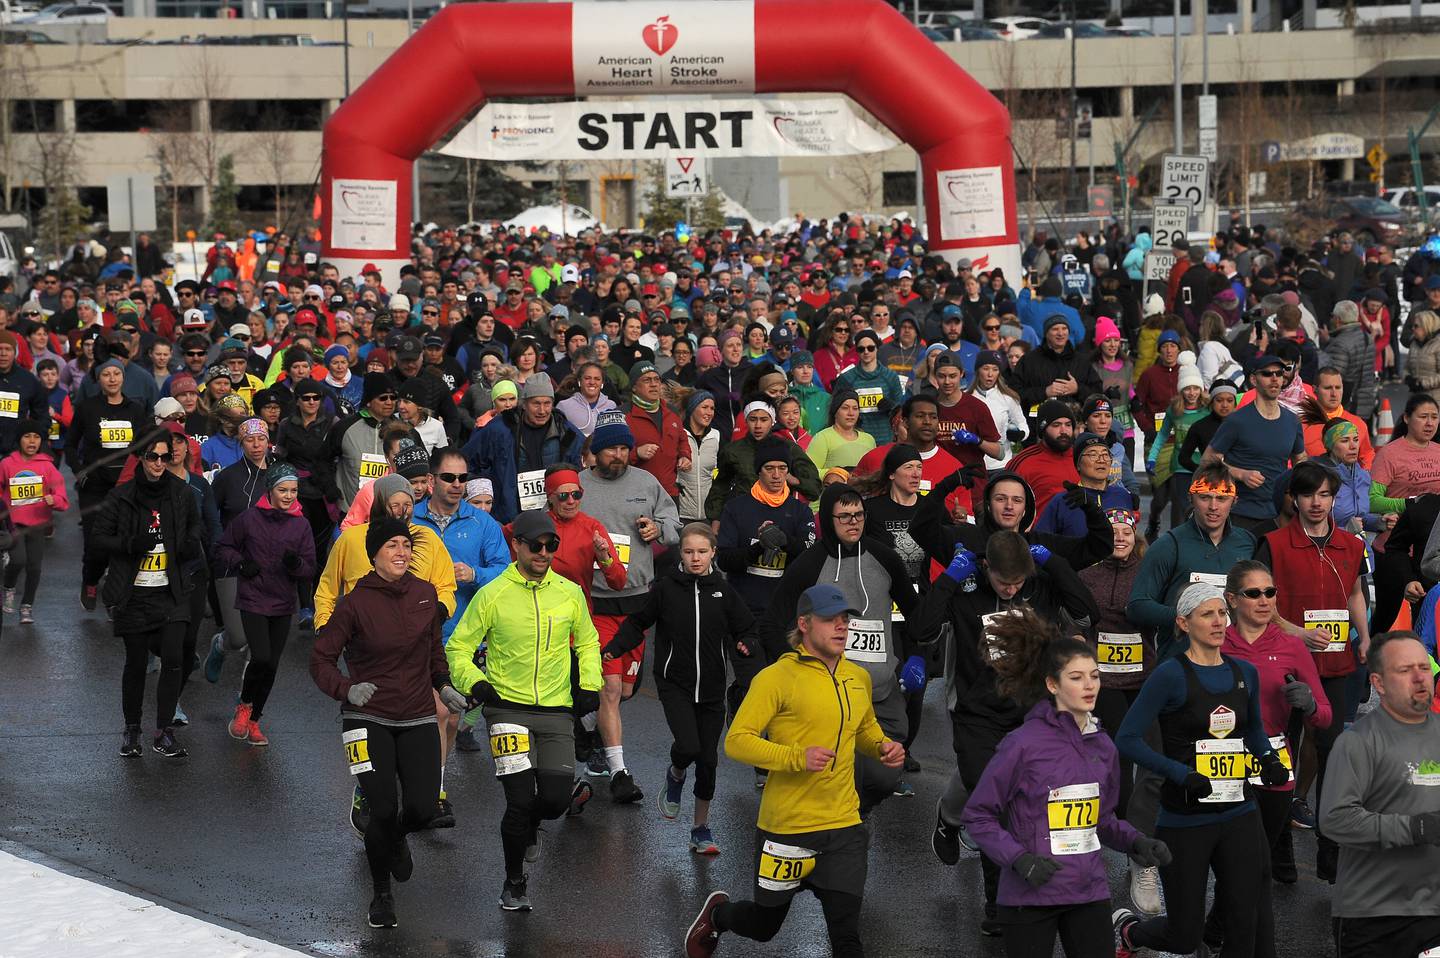 2019 Heart Run, Race, University of Alaska Anchorage, Alaska Pacific University, Race, Heart Run